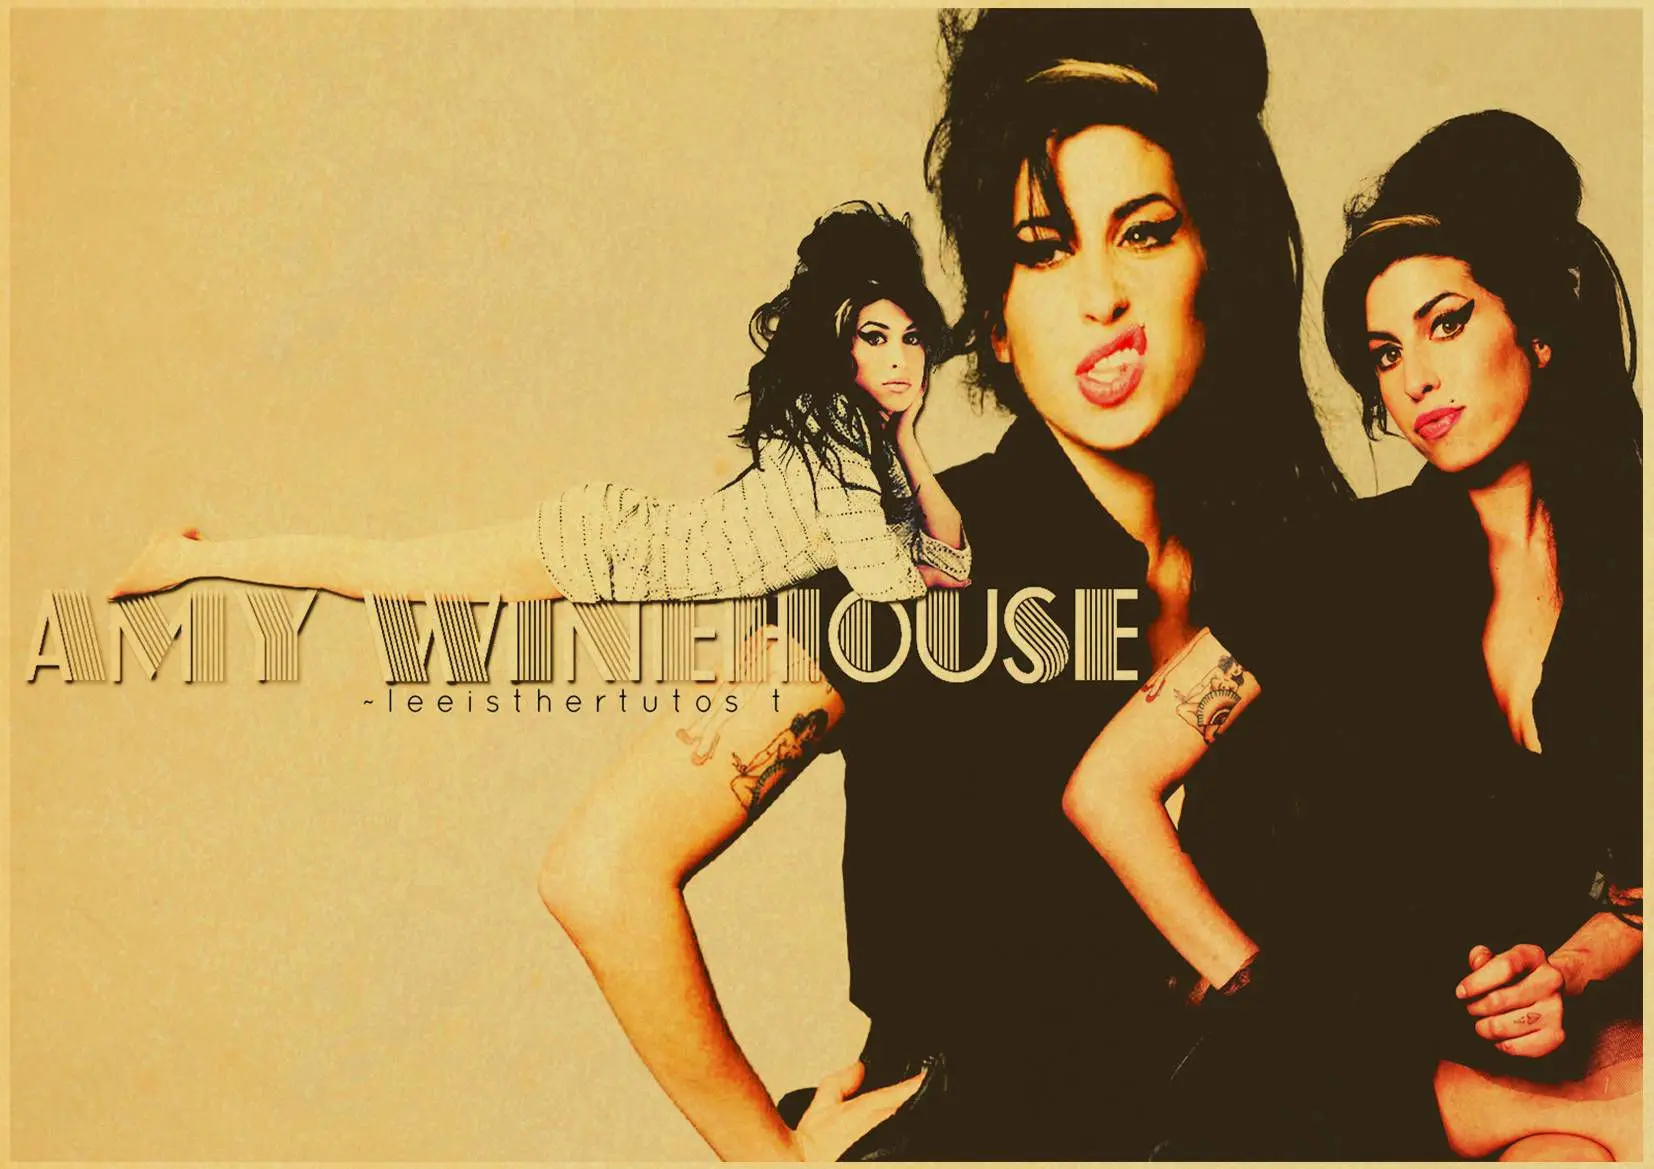 Amy Winehouse певец винтажные плакаты крафт-бумага бар декоративные настенные стикеры классические картины